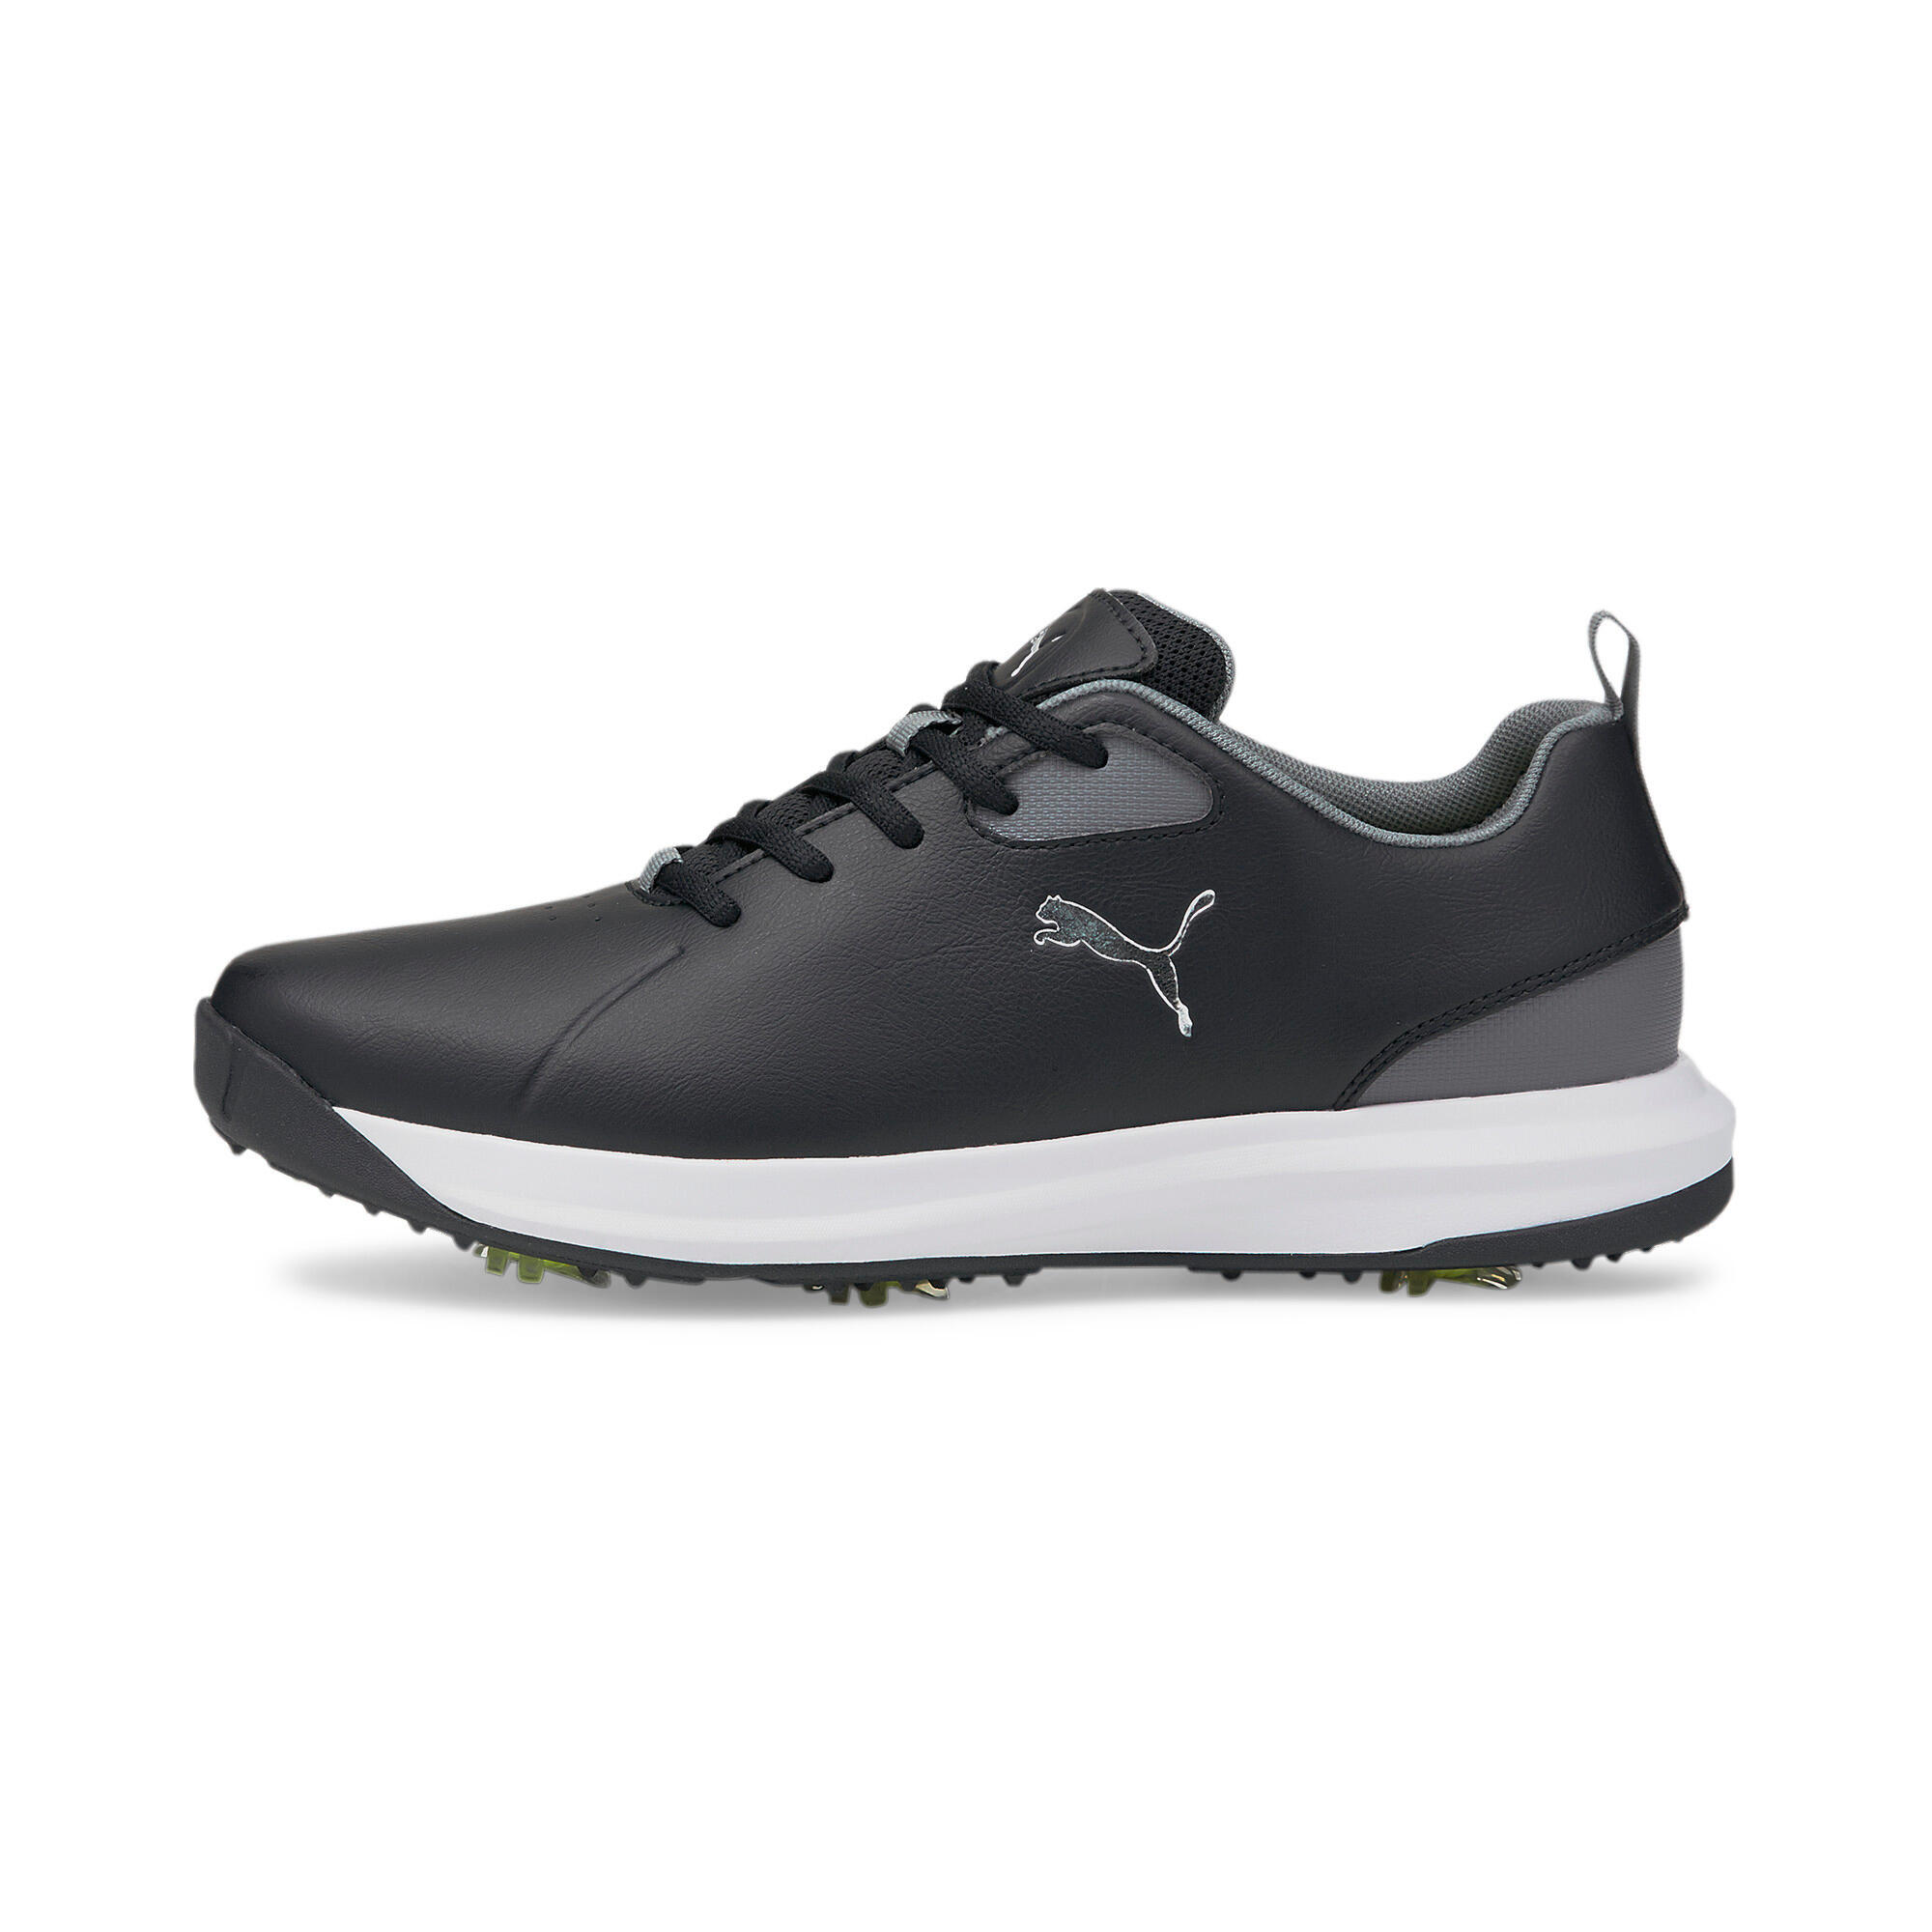 PUMA PUMA Mens FUSION FX Tech Golf Shoes - Black-Silver-Quiet Shade